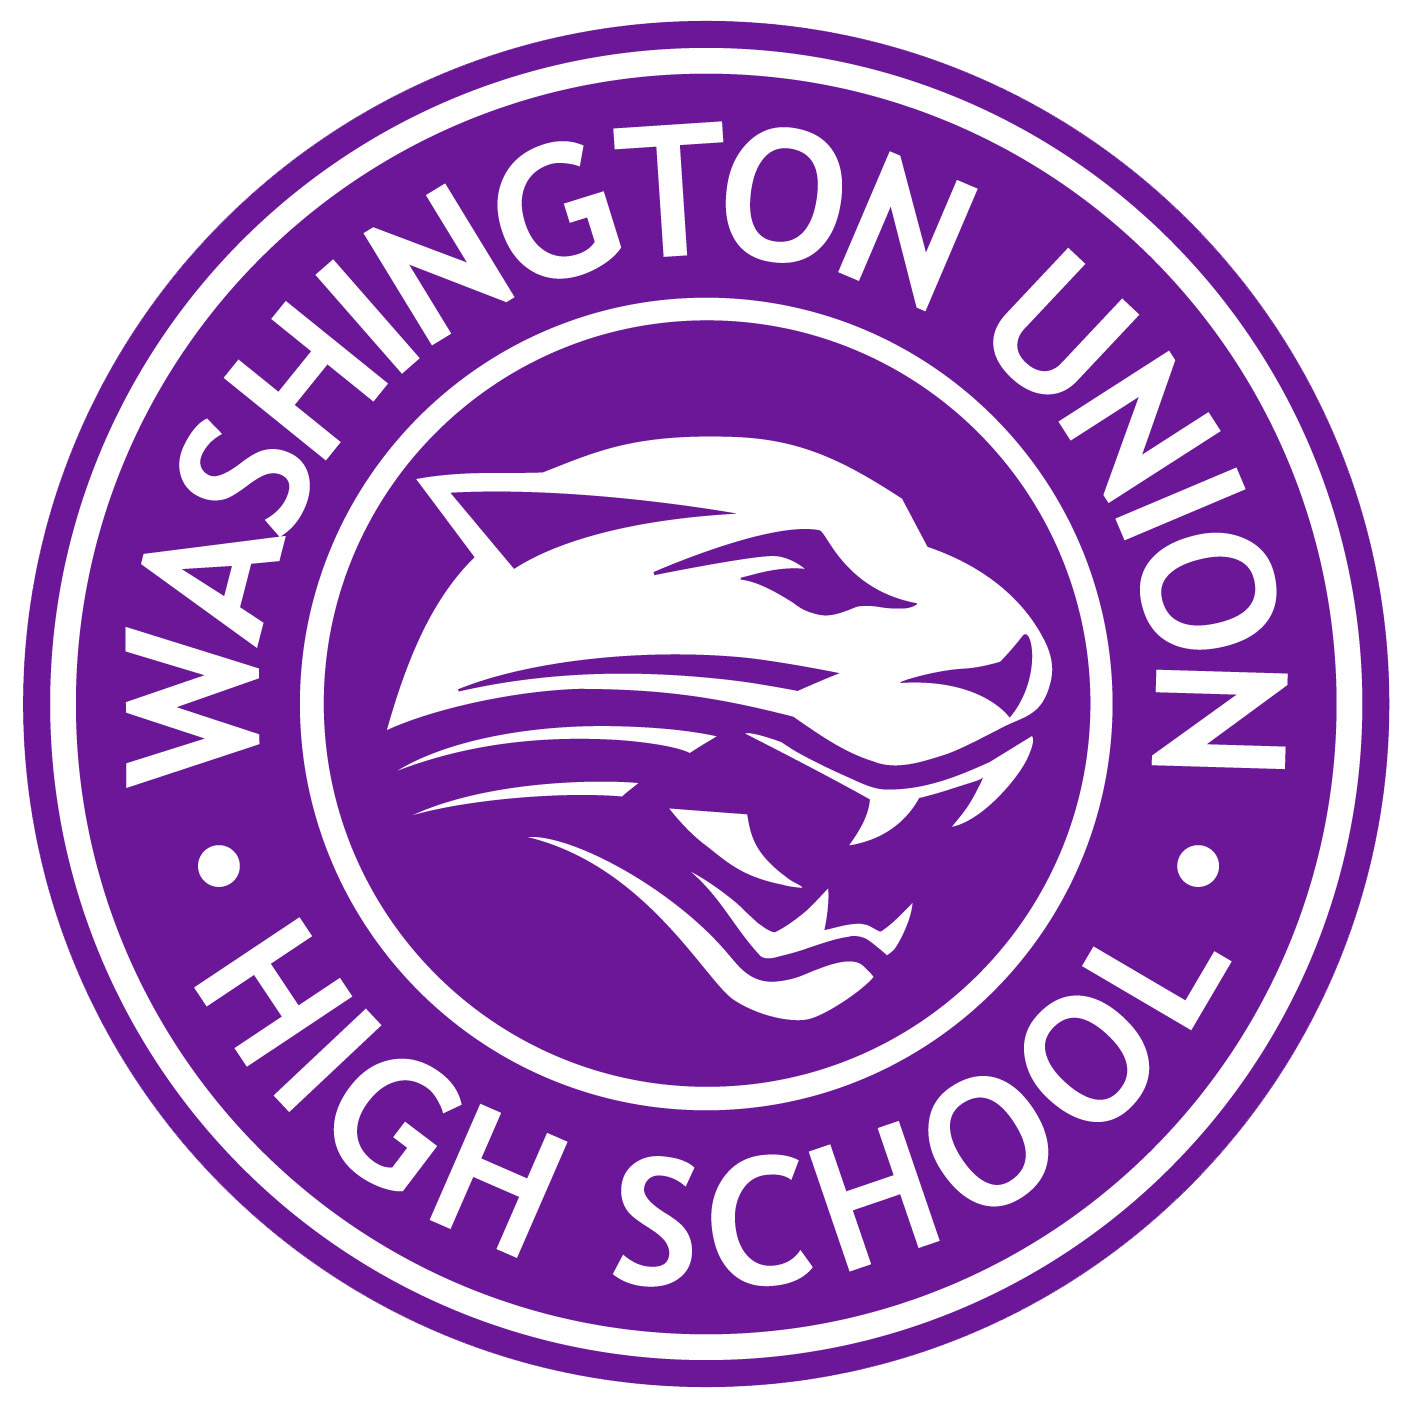 Washington Union High School Logo